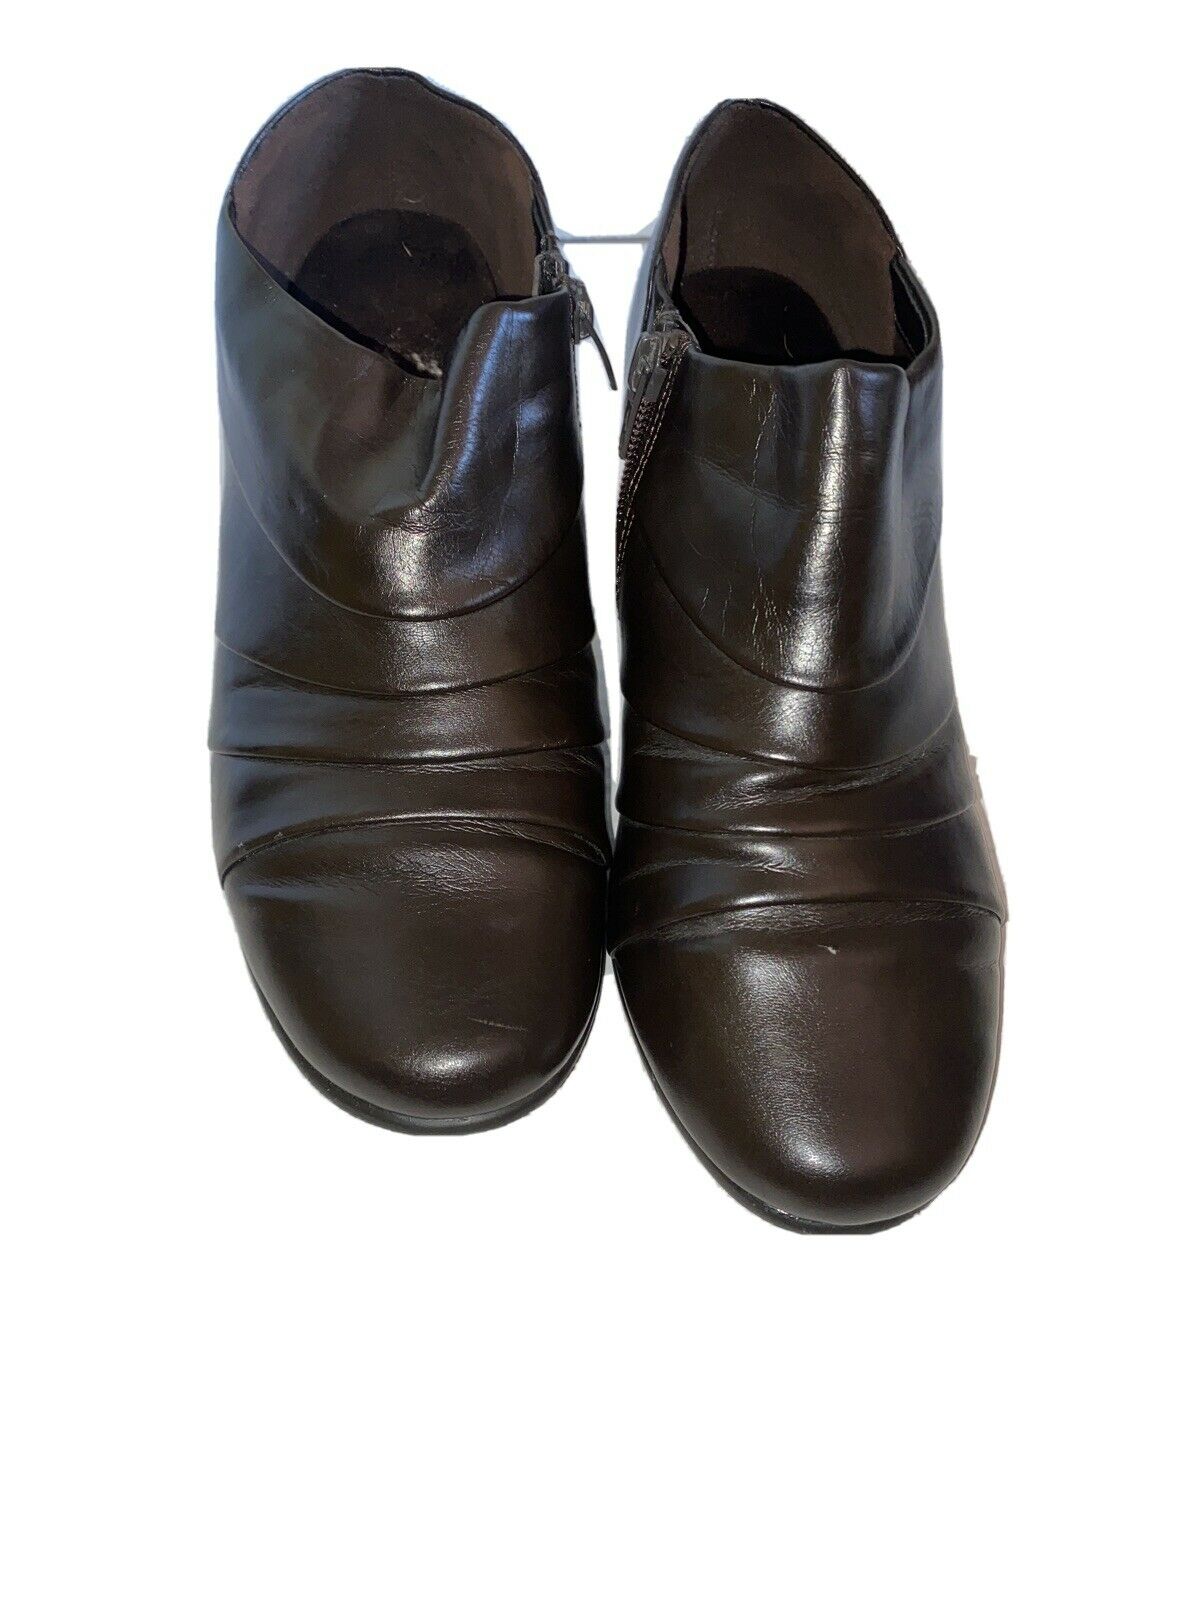 NEW Aerosoles Heel Rest Brown Ankle Boots Booties Shoes Size 8.5 Comfort